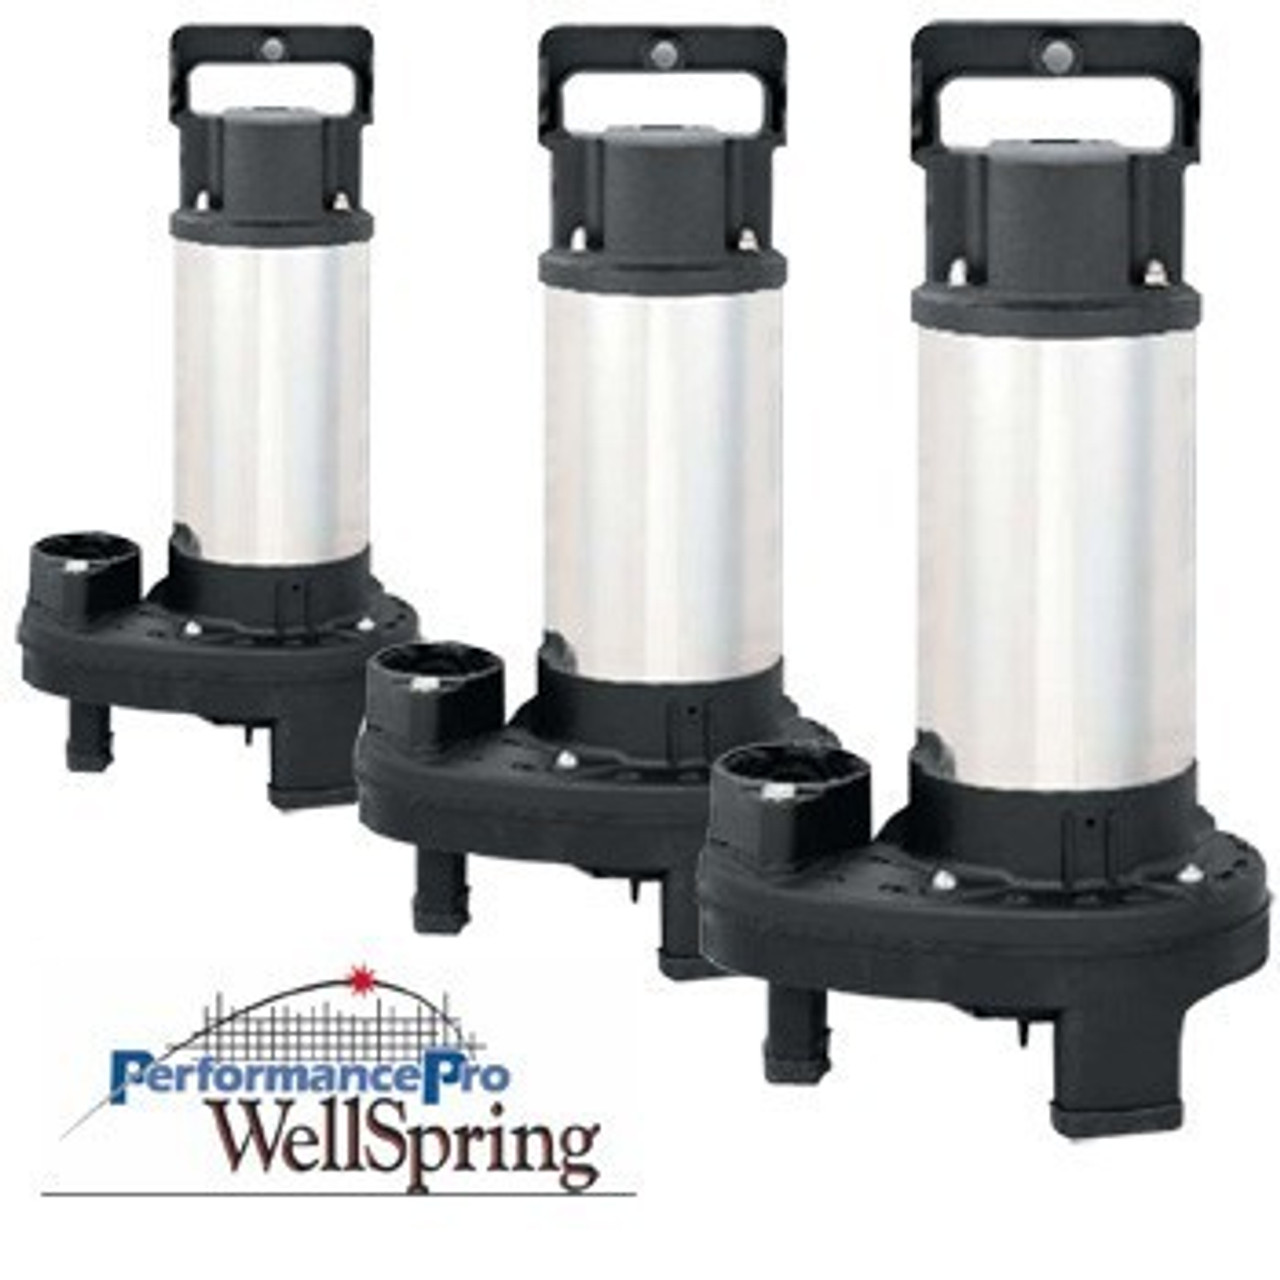 1 HP PerformancePro WellSpring Pump - FREE SHIPPING